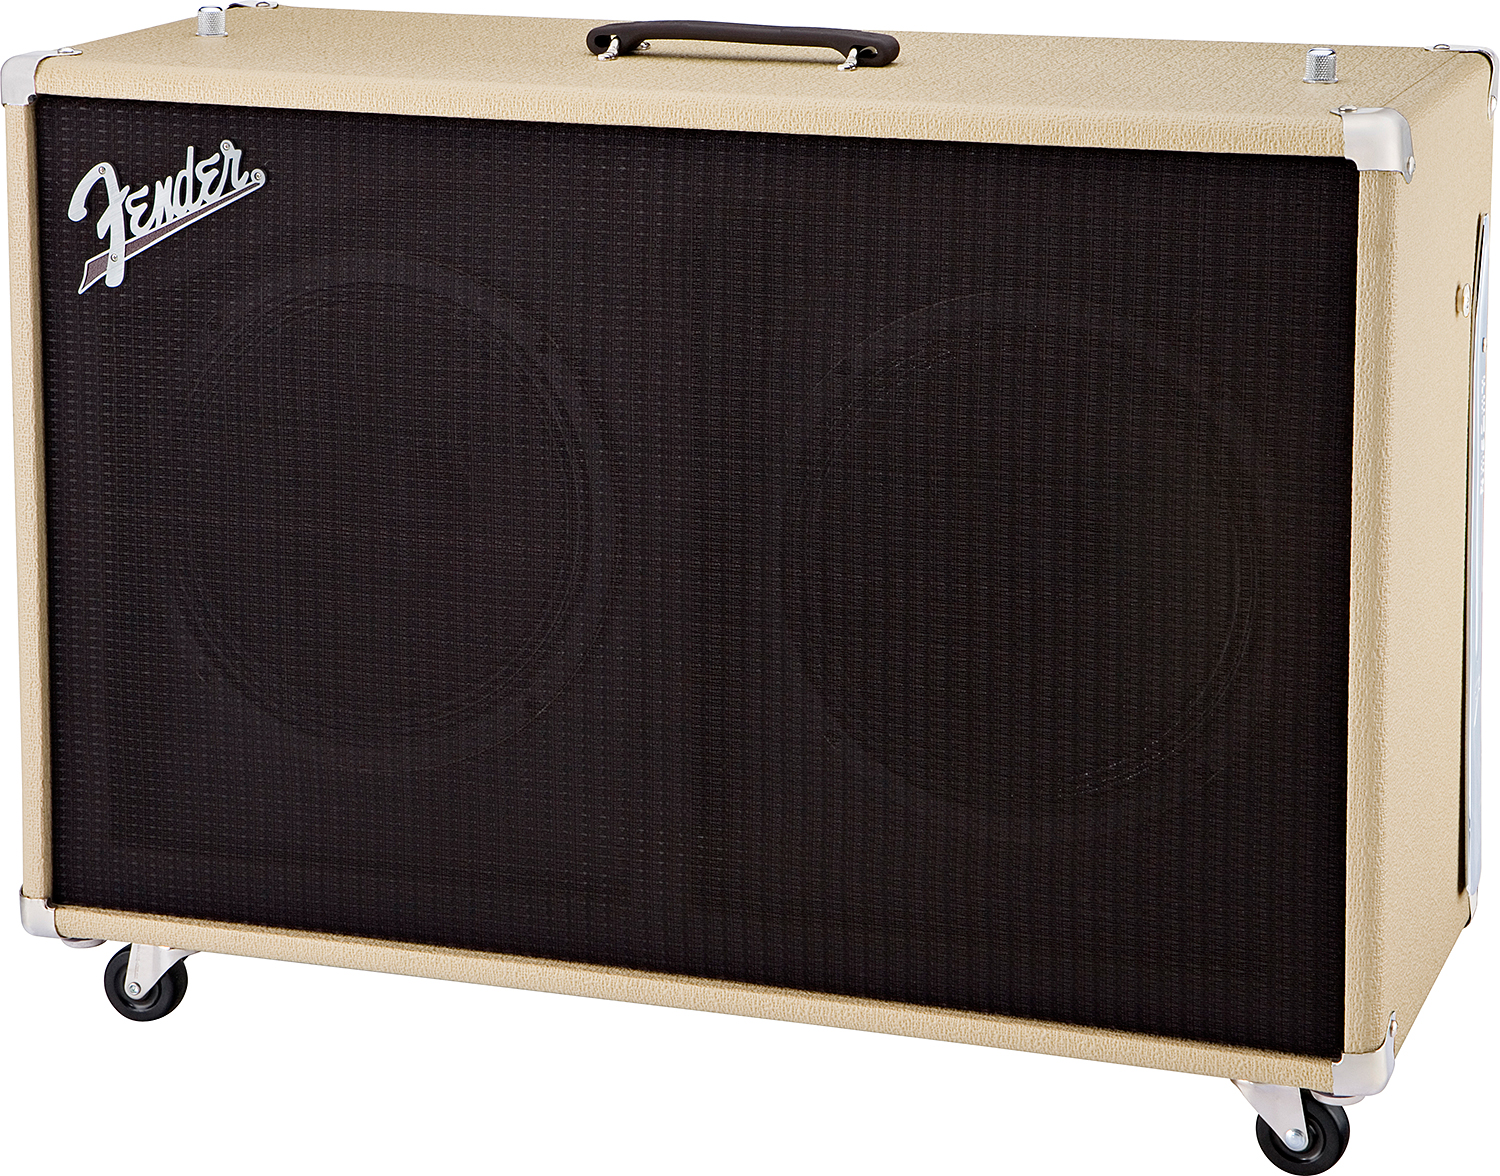 Fender Super Sonic 60 212 Enclosure 2x12 120w Blonde - Electric guitar amp cabinet - Variation 1